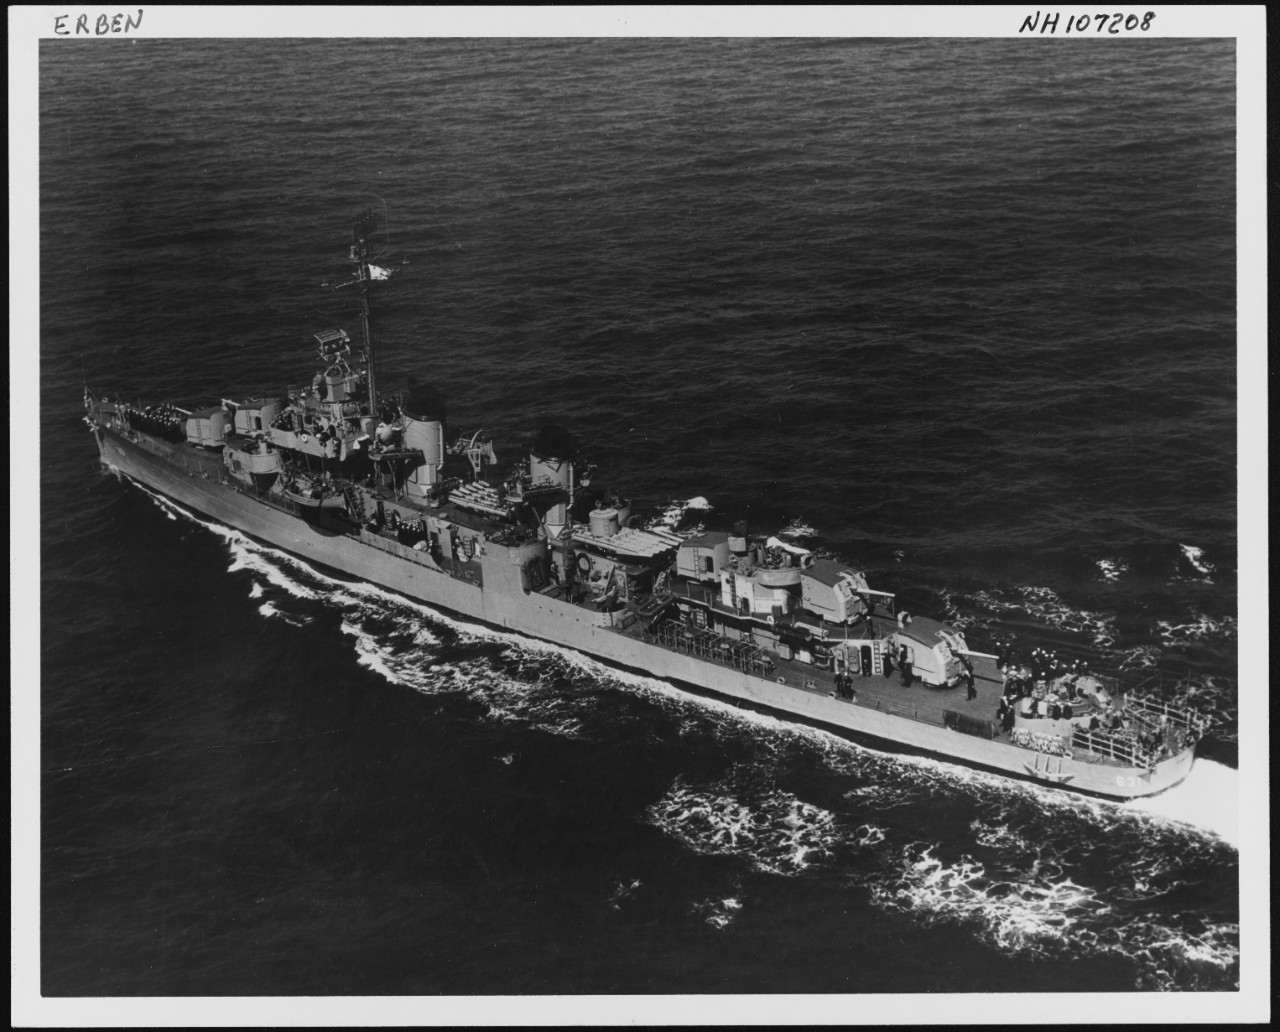 Photo #: NH 107208  USS Erben